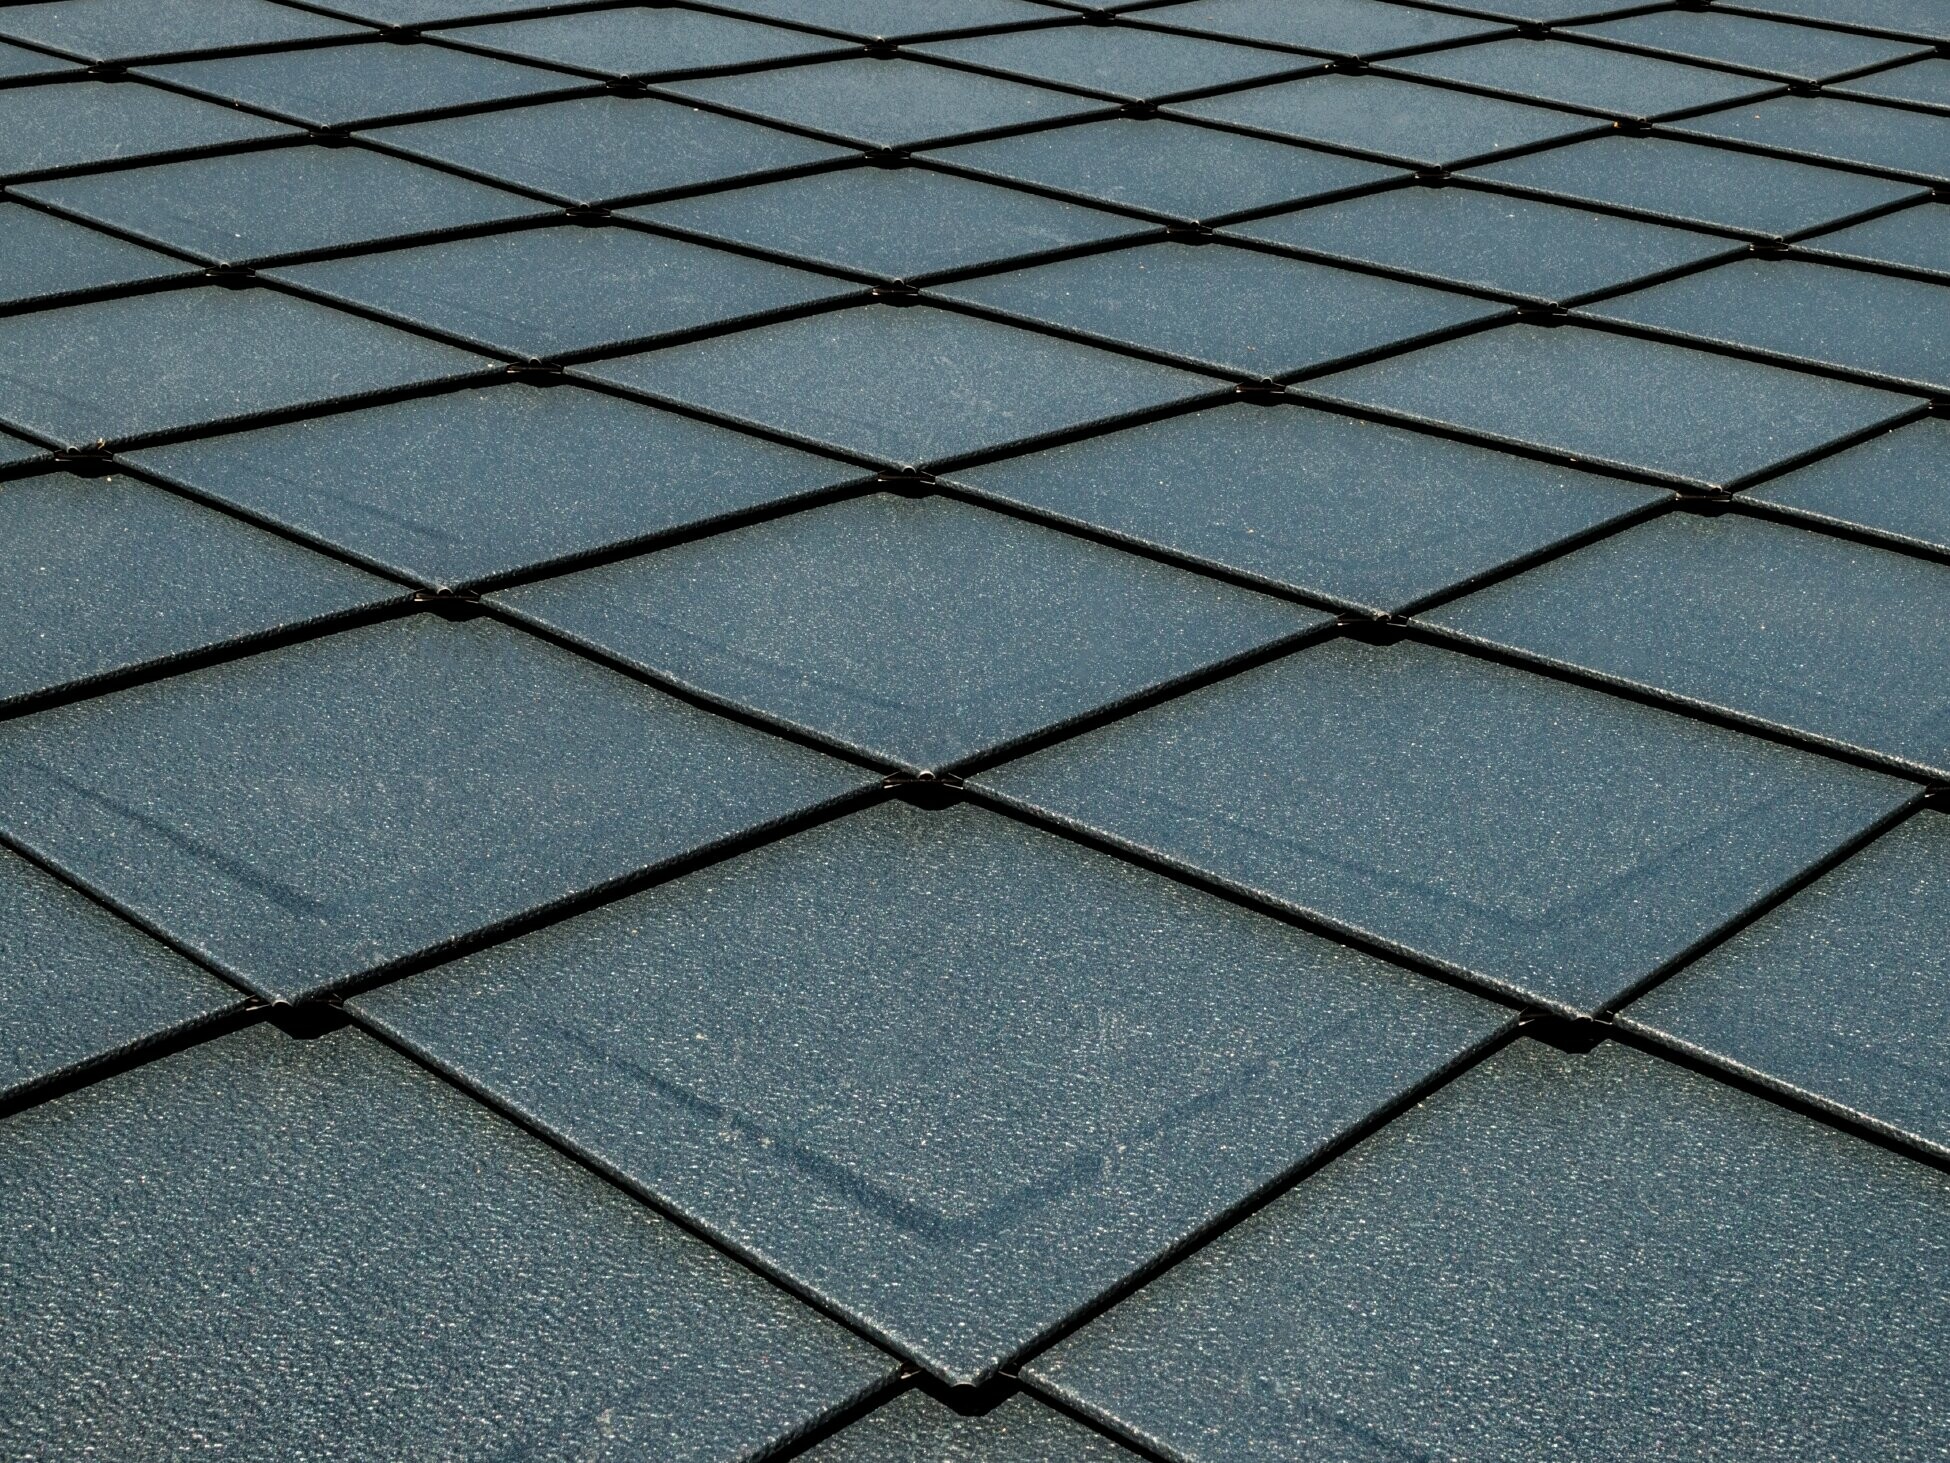 PREFA takromb 29 × 29 i P.10 antracit med prägling lagd på yta, tak med sicksackmönster